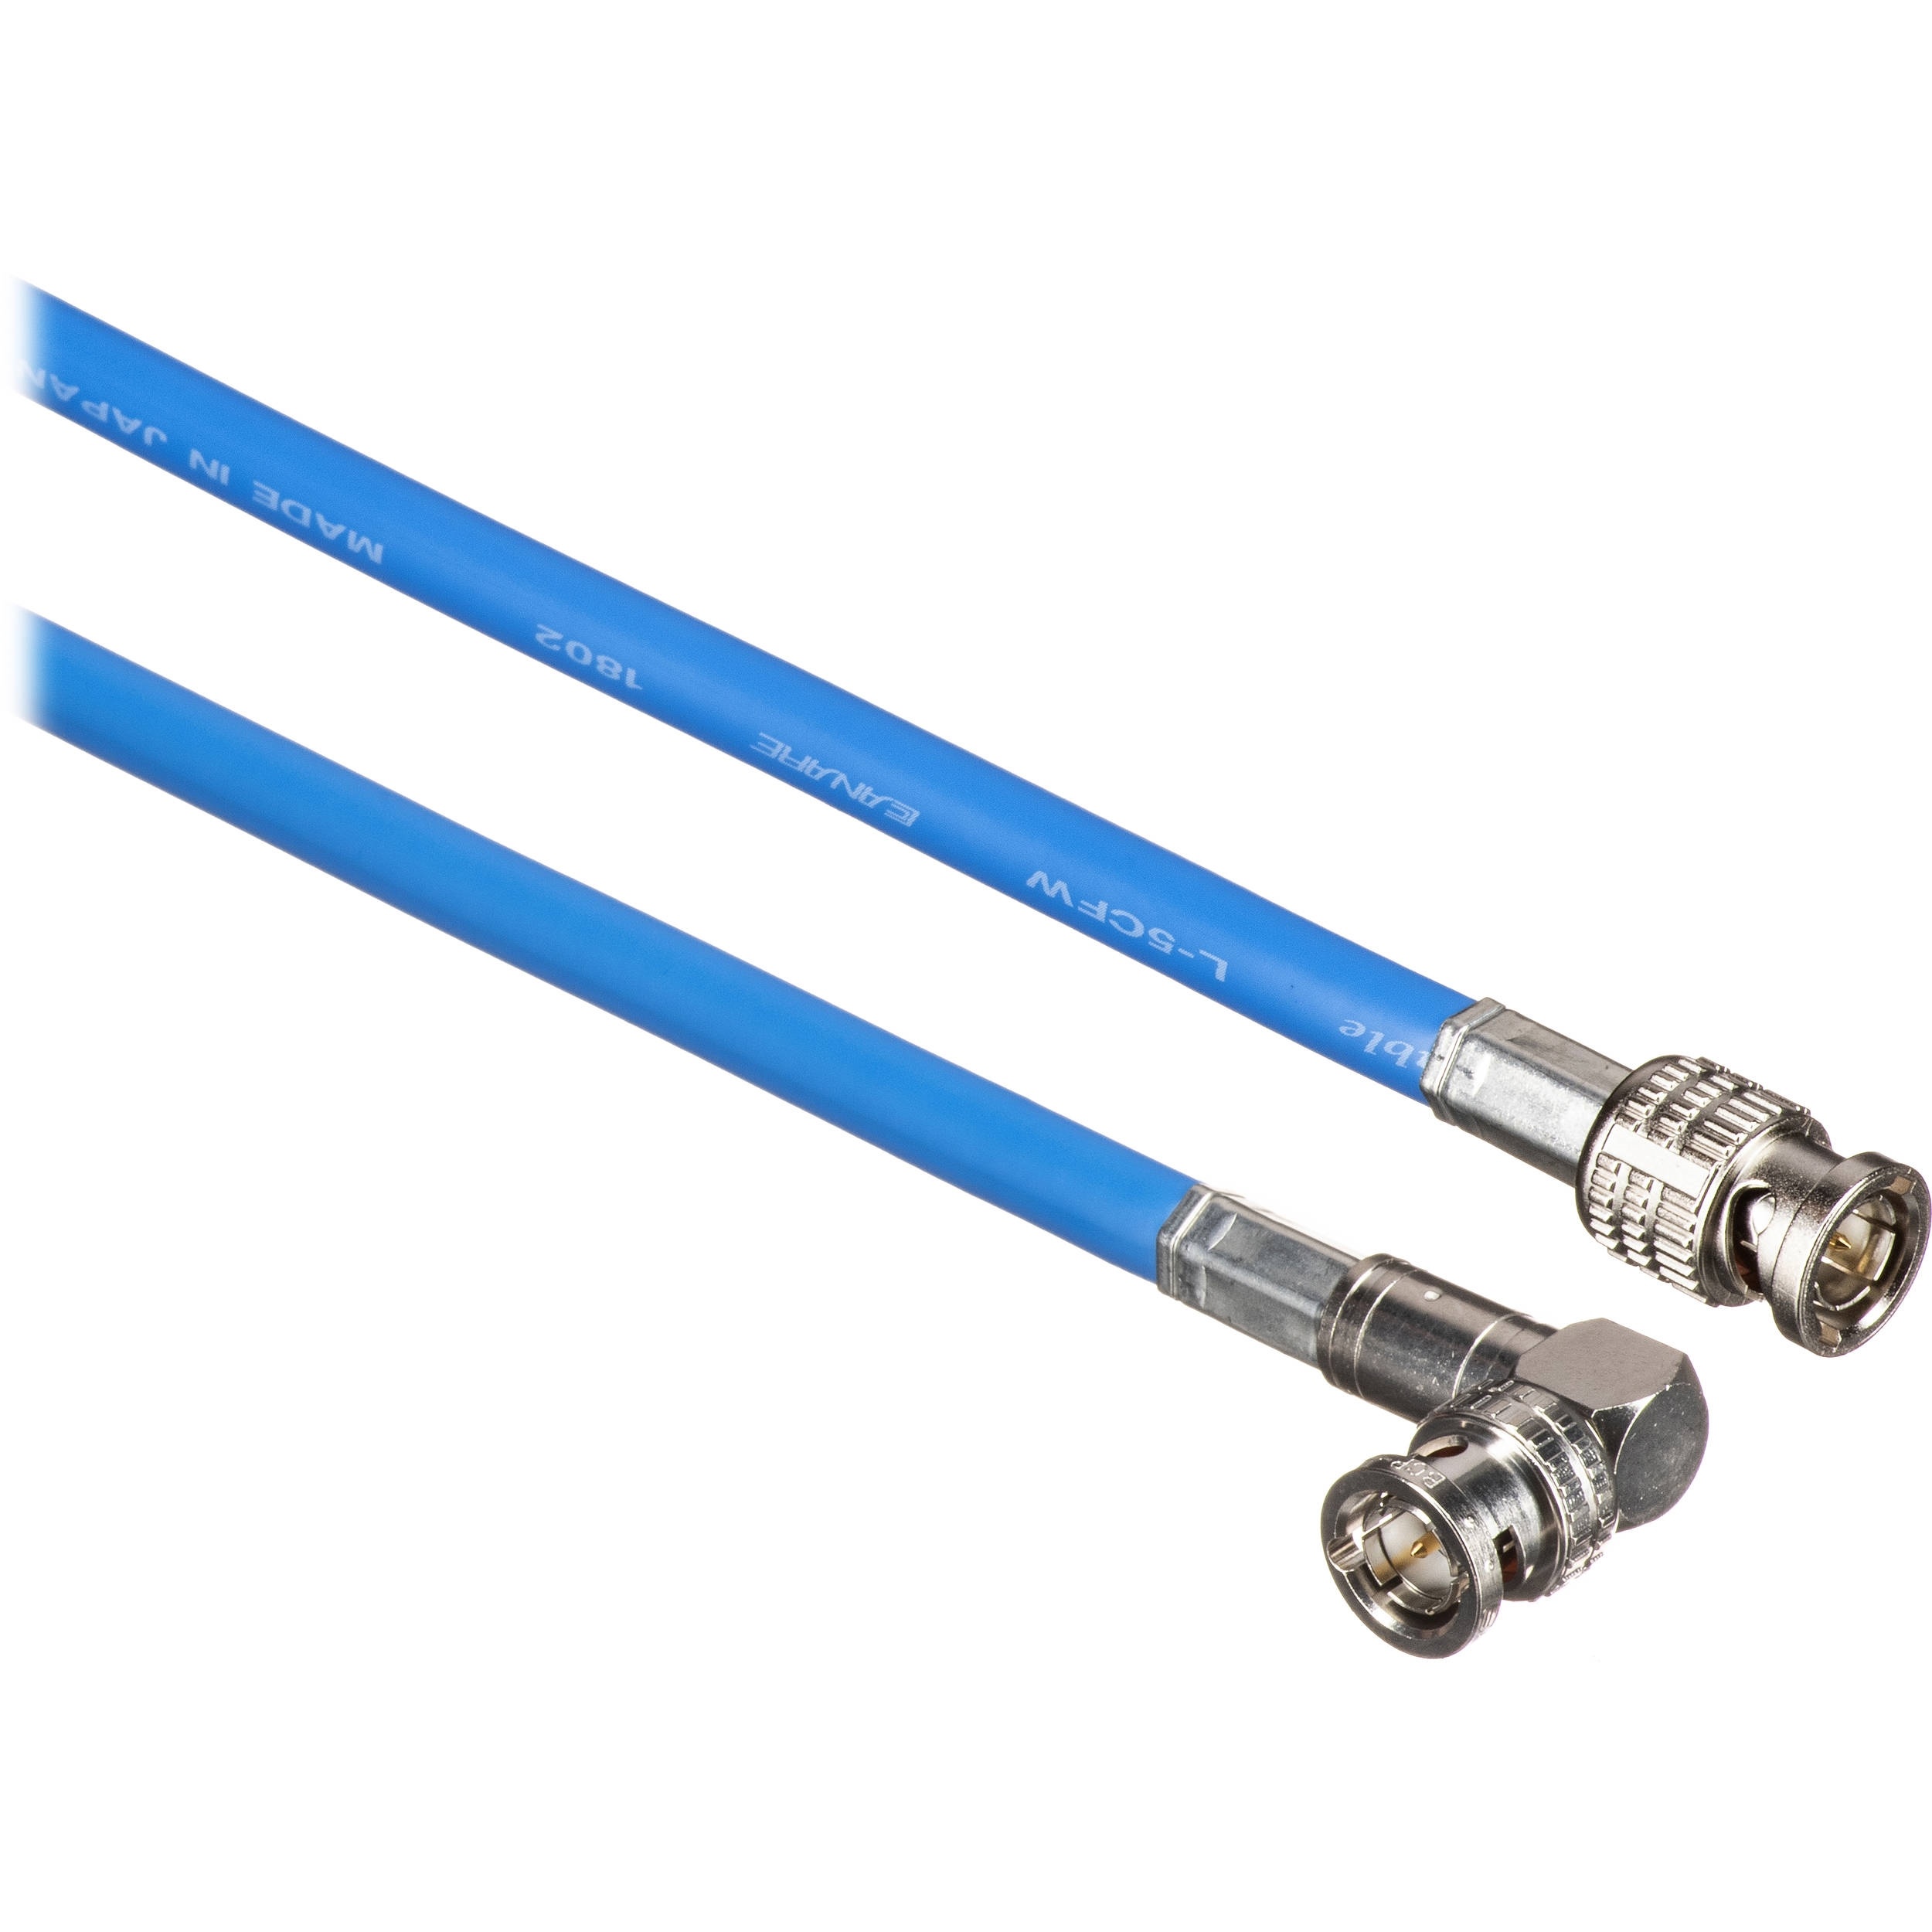 Canare Male to Right Angle Male HD-SDI Video Cable (Blue, 35')